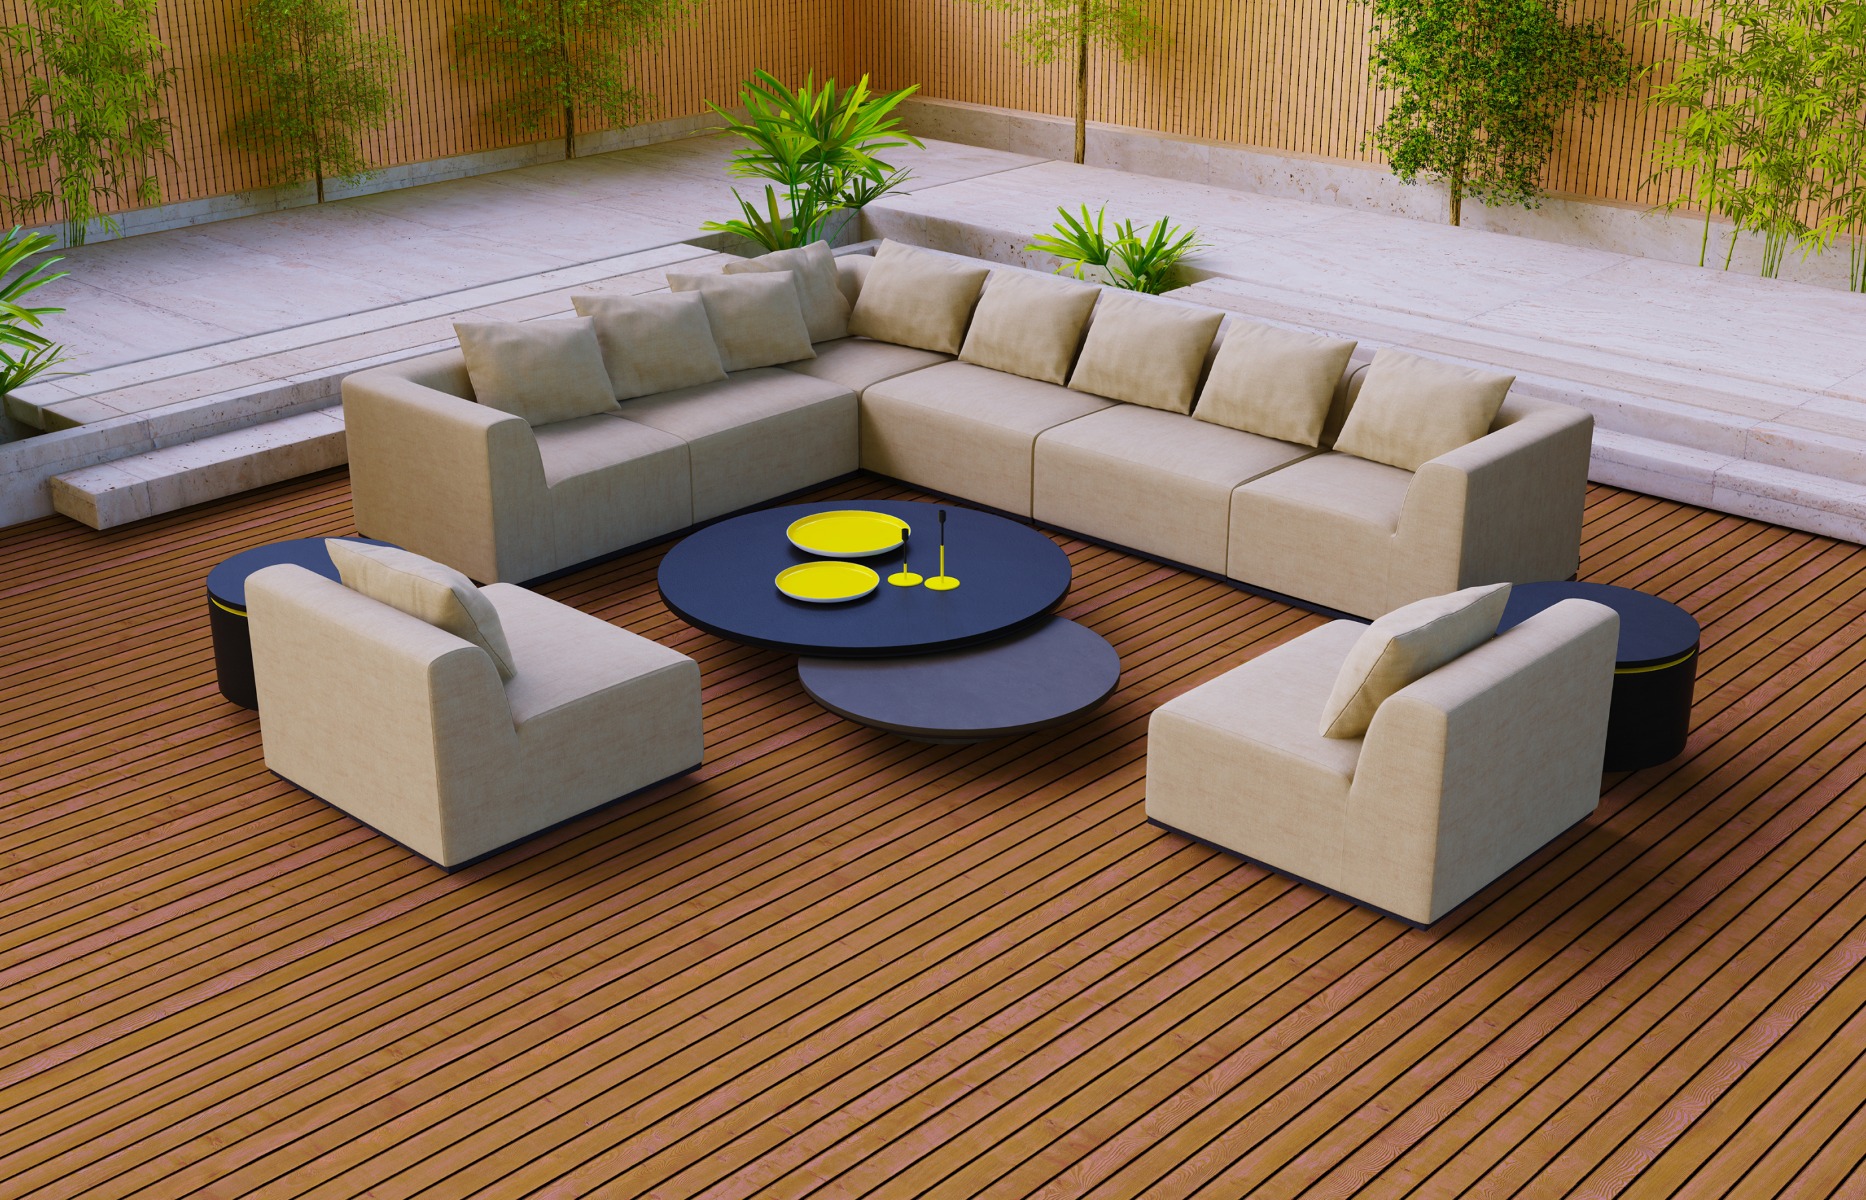 Blinde Design Relax S37 Modular Sofas